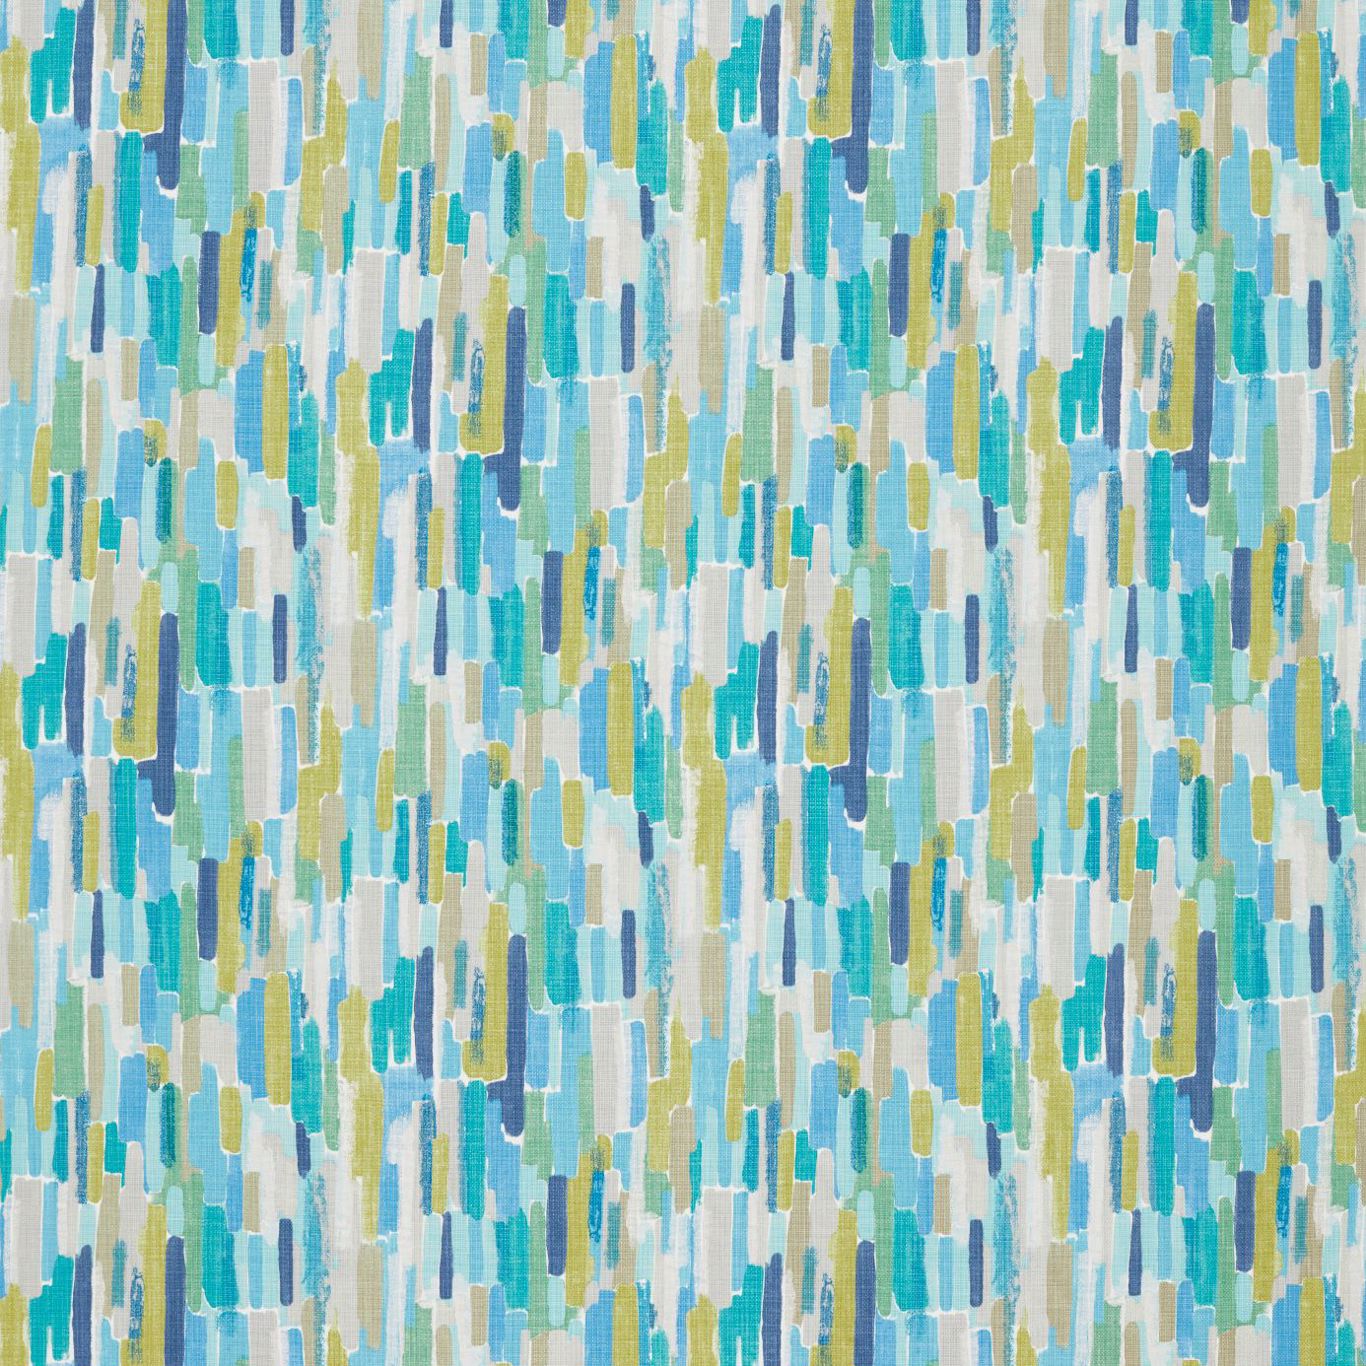 Trattino Turquoise / Ocean / Marine Fabric by HAR